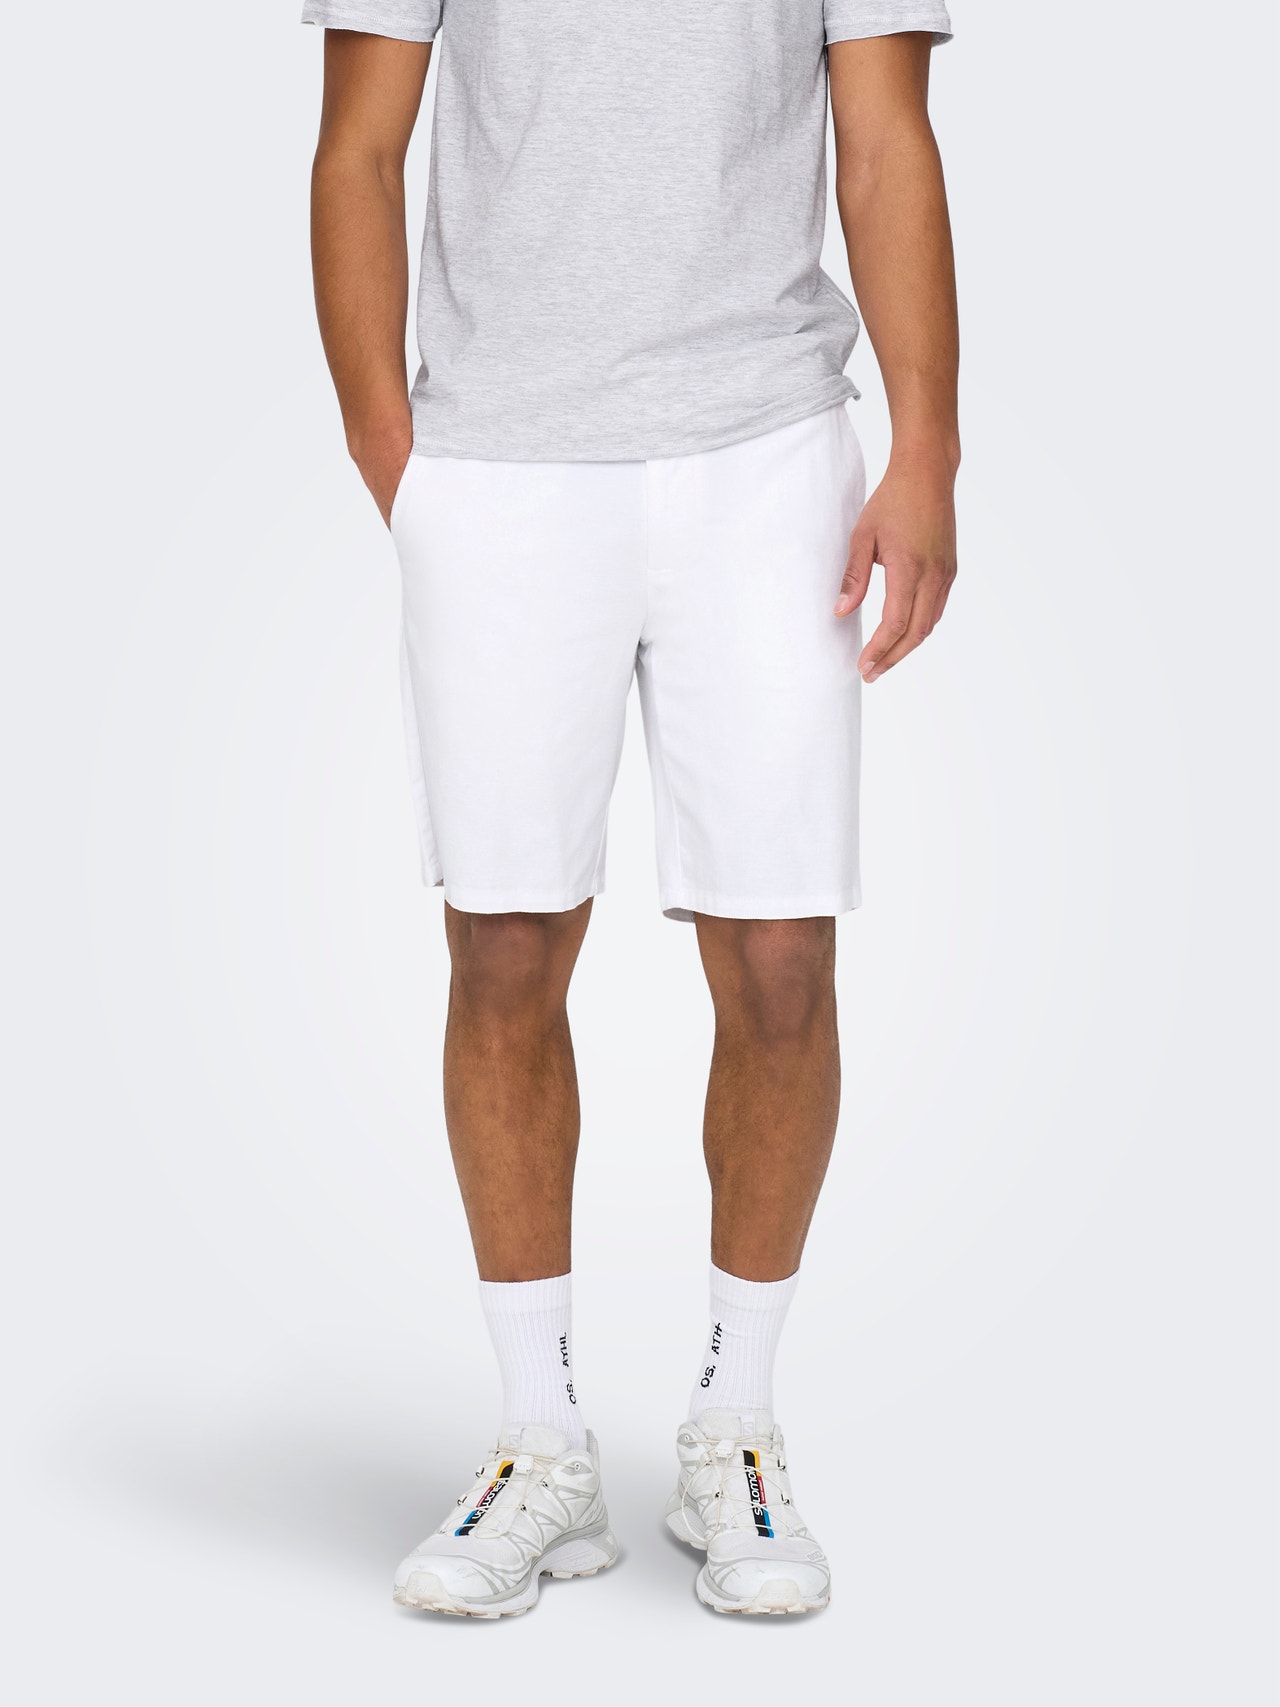 ONLY & SONS Normal geschnitten Shorts -White - 22024940